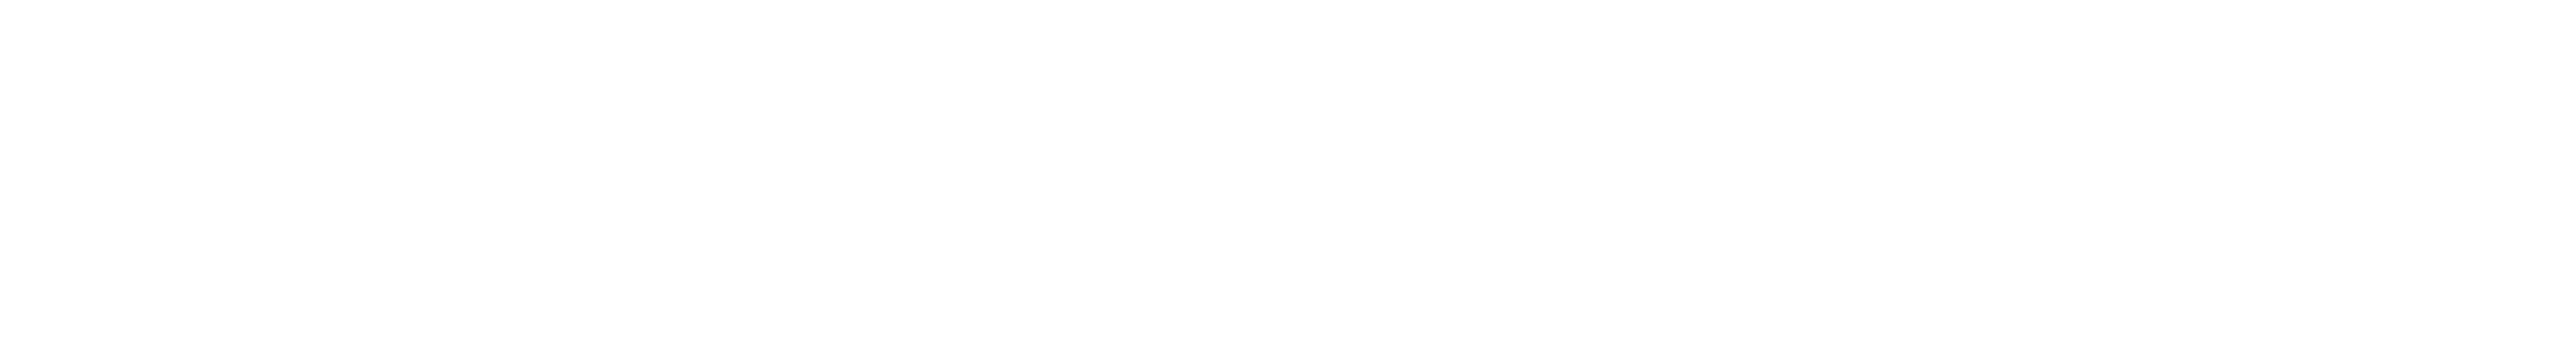 UNESCO International Bureau of Education